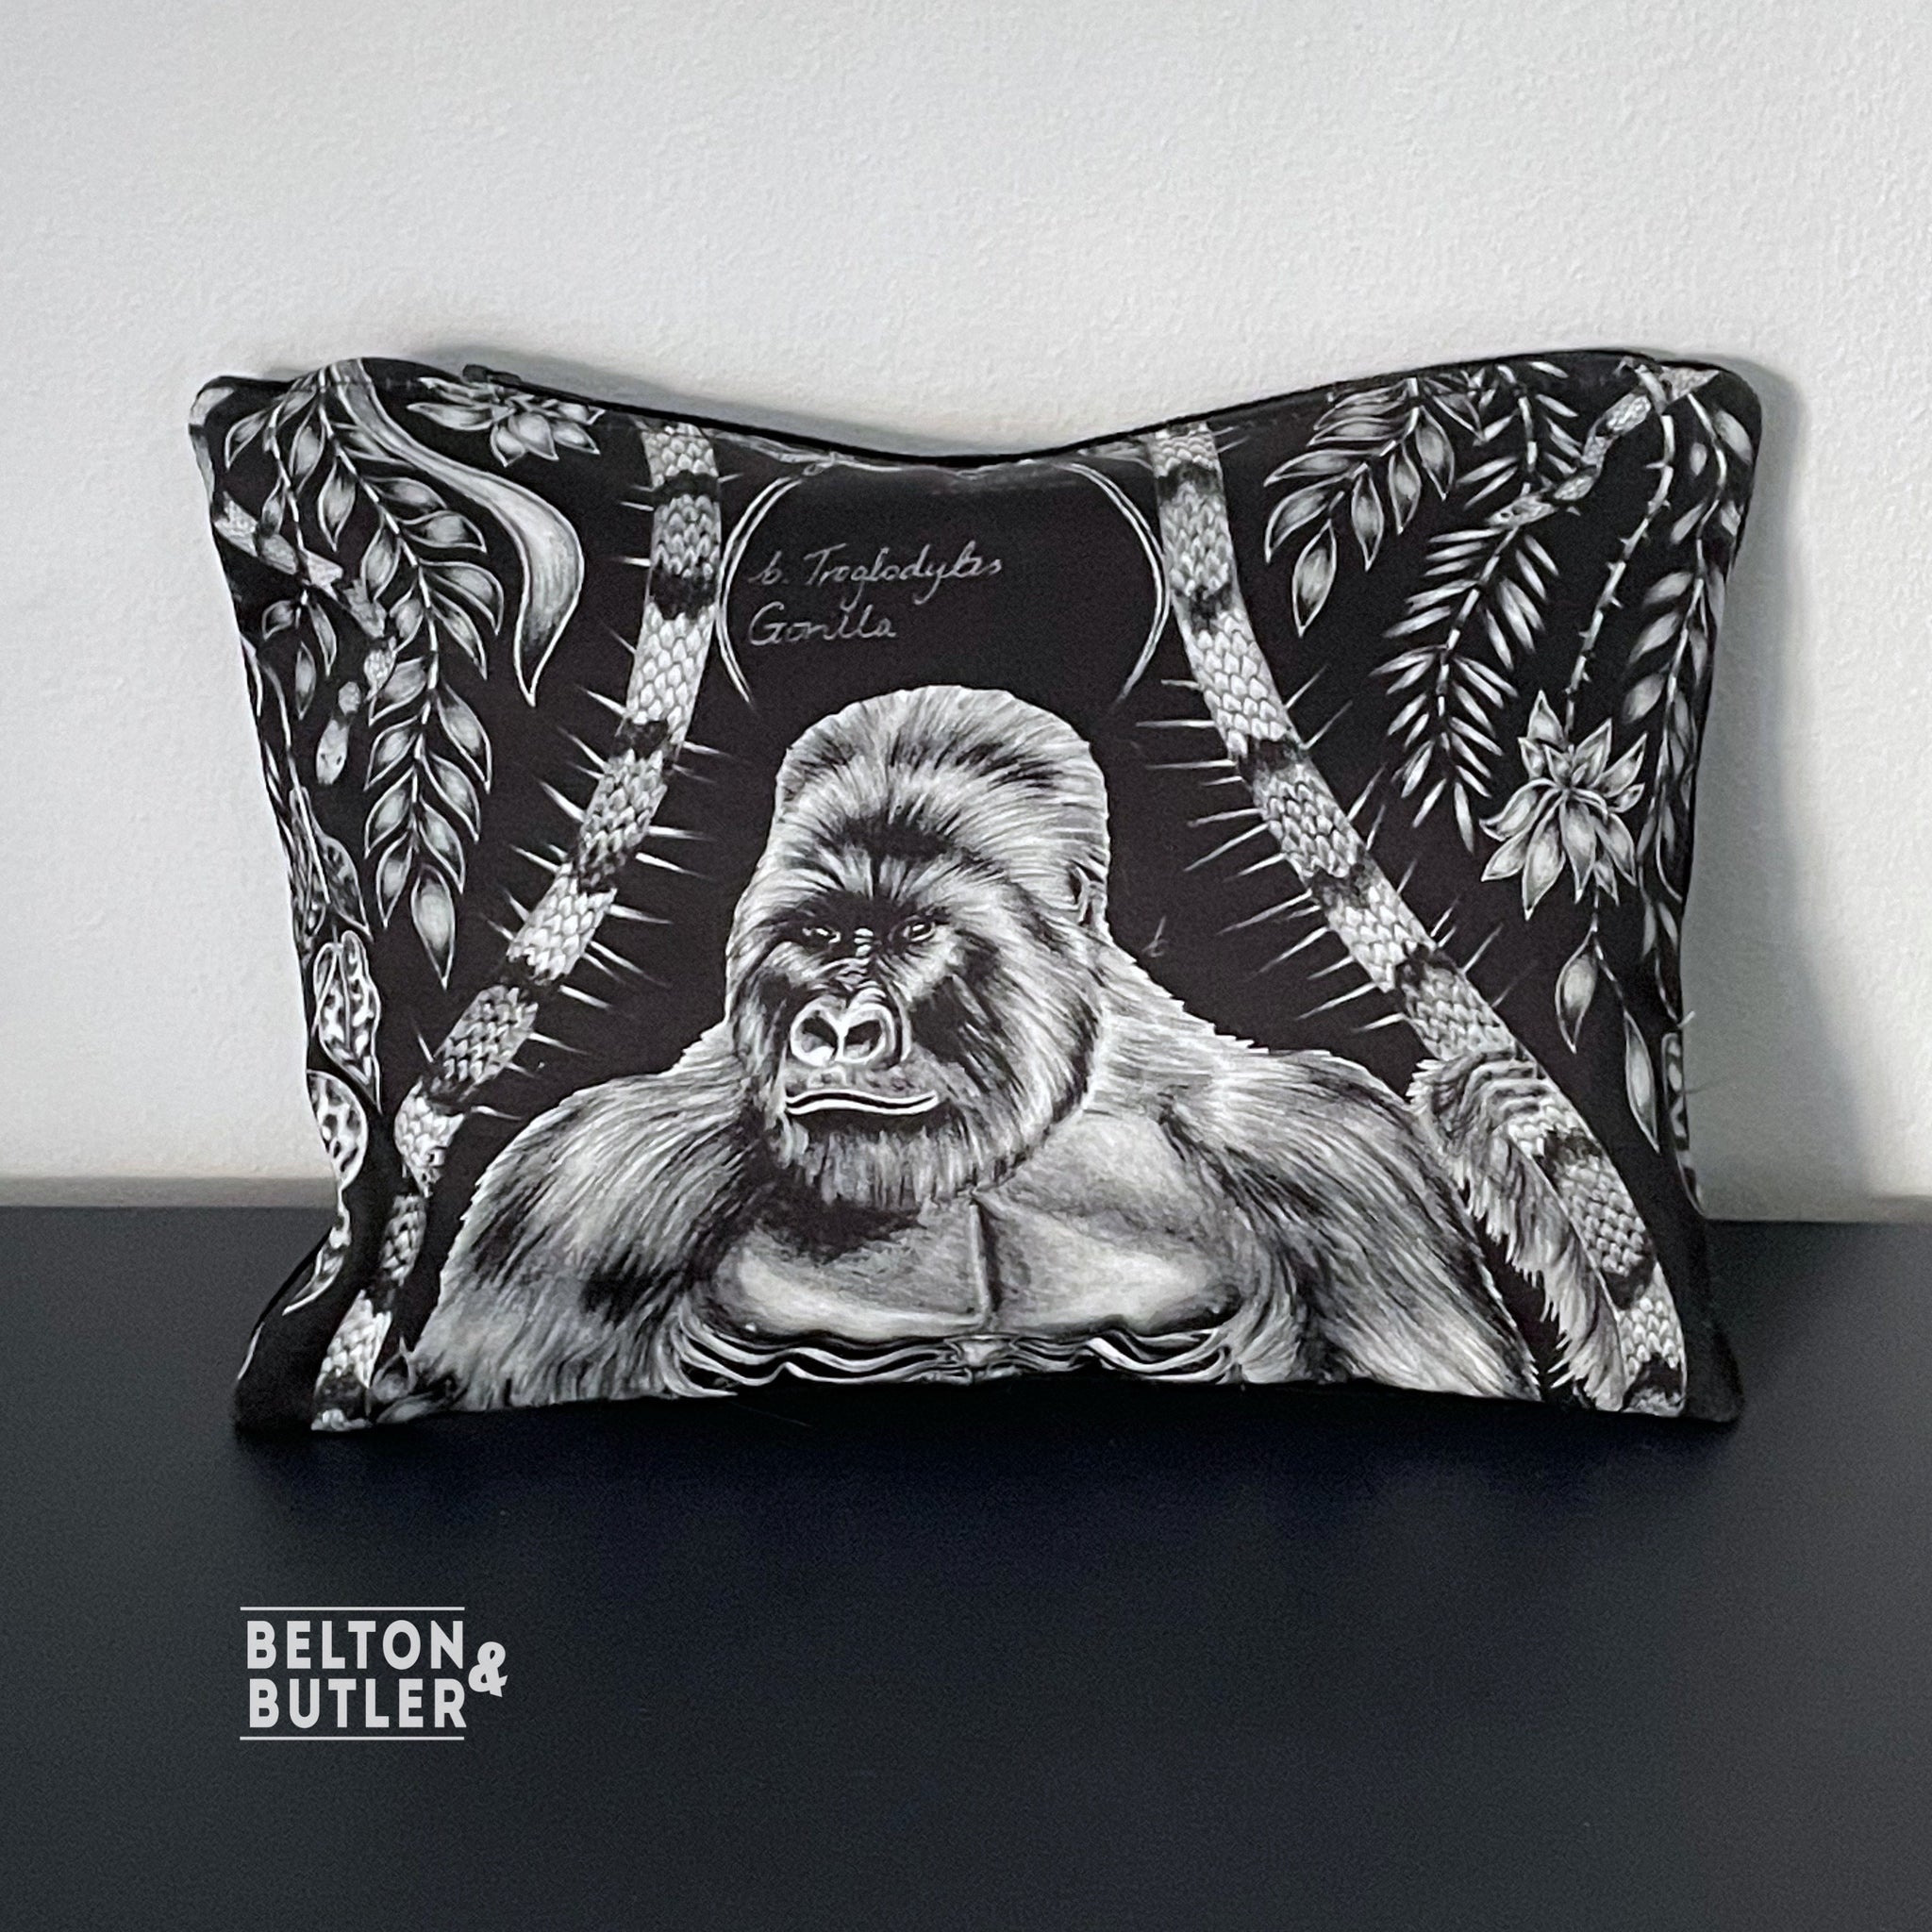 Handmade Make Up / Travel Toiletries Bag in “Silverback” Fabric by Emma Shipley-Belton & Butler